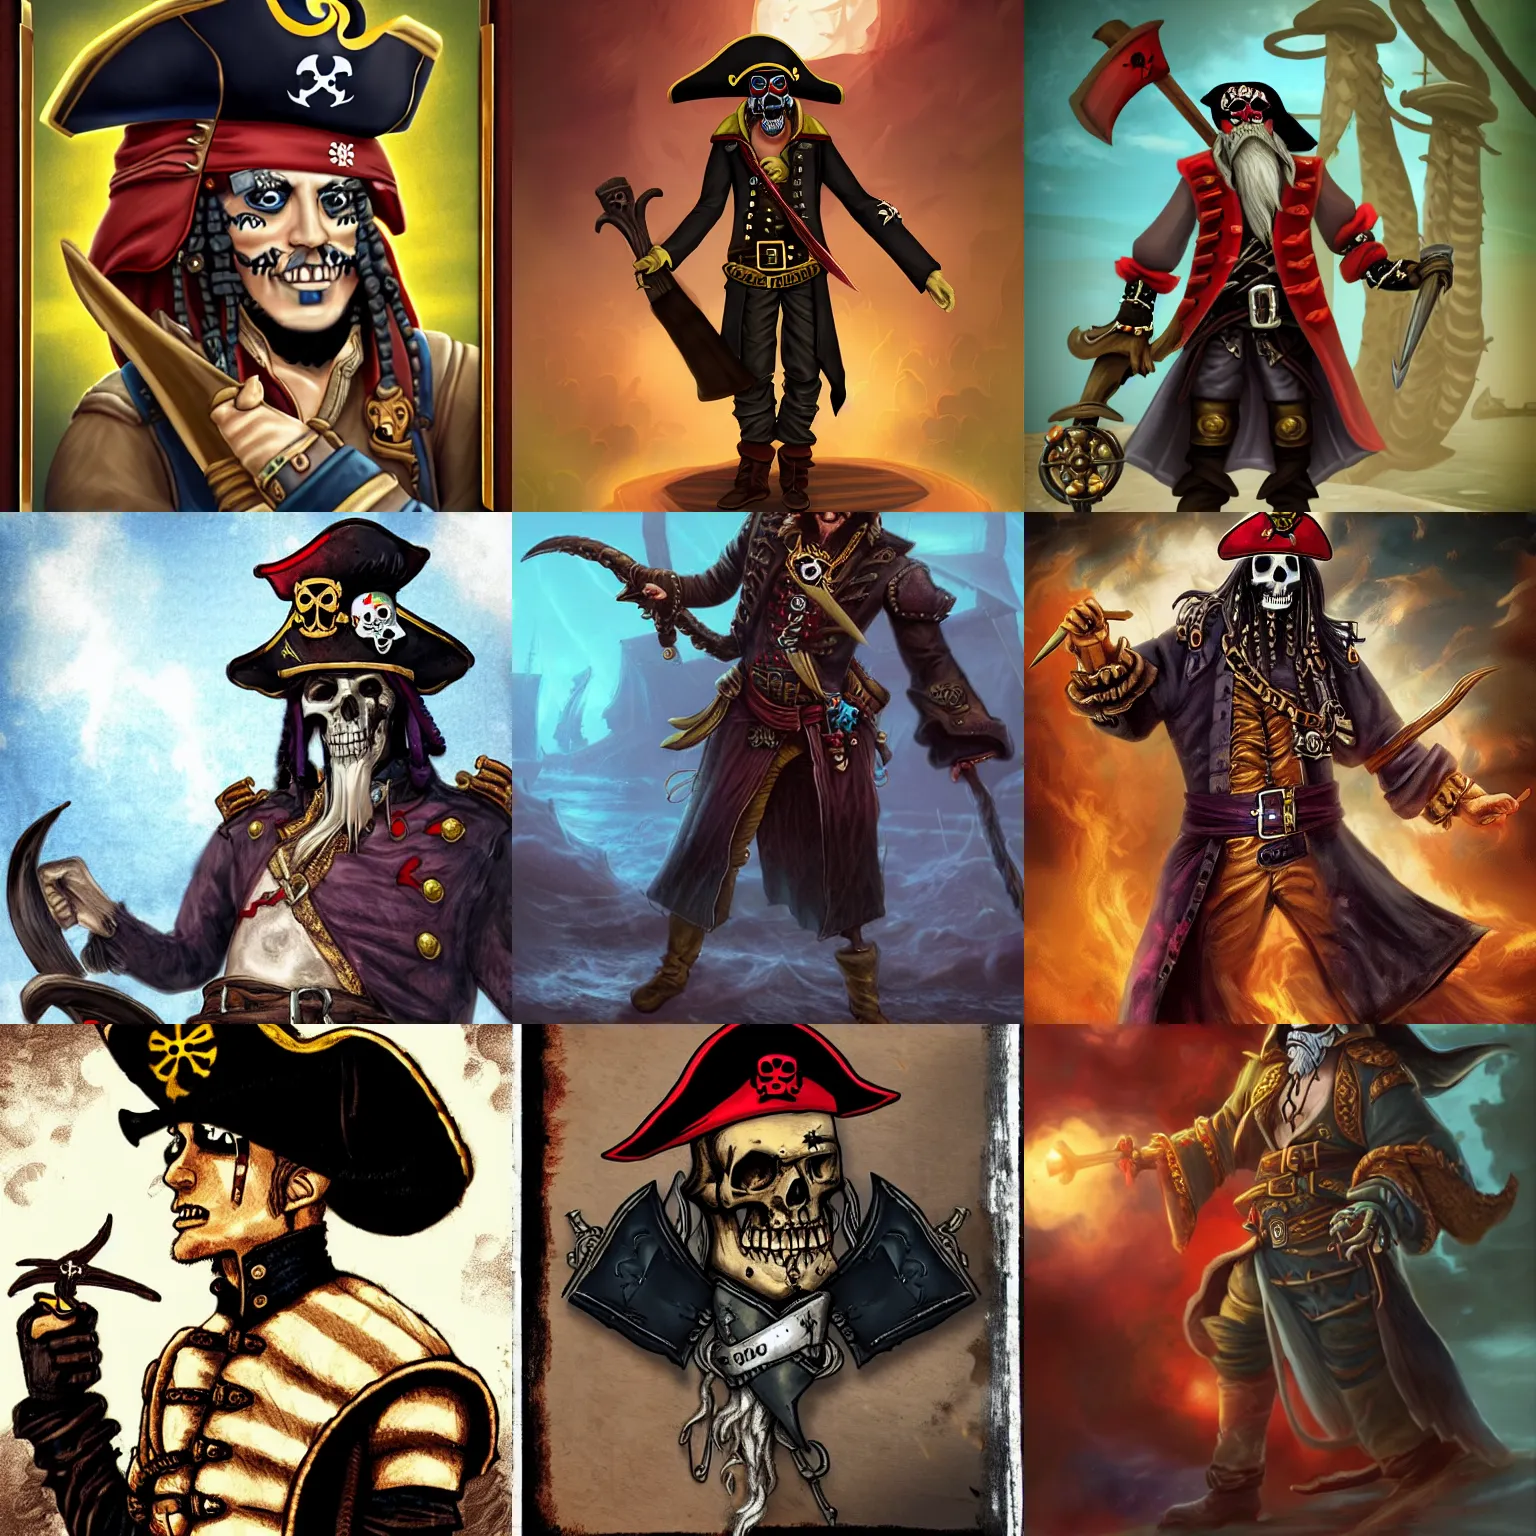 Prompt: a necromancer pirate captain